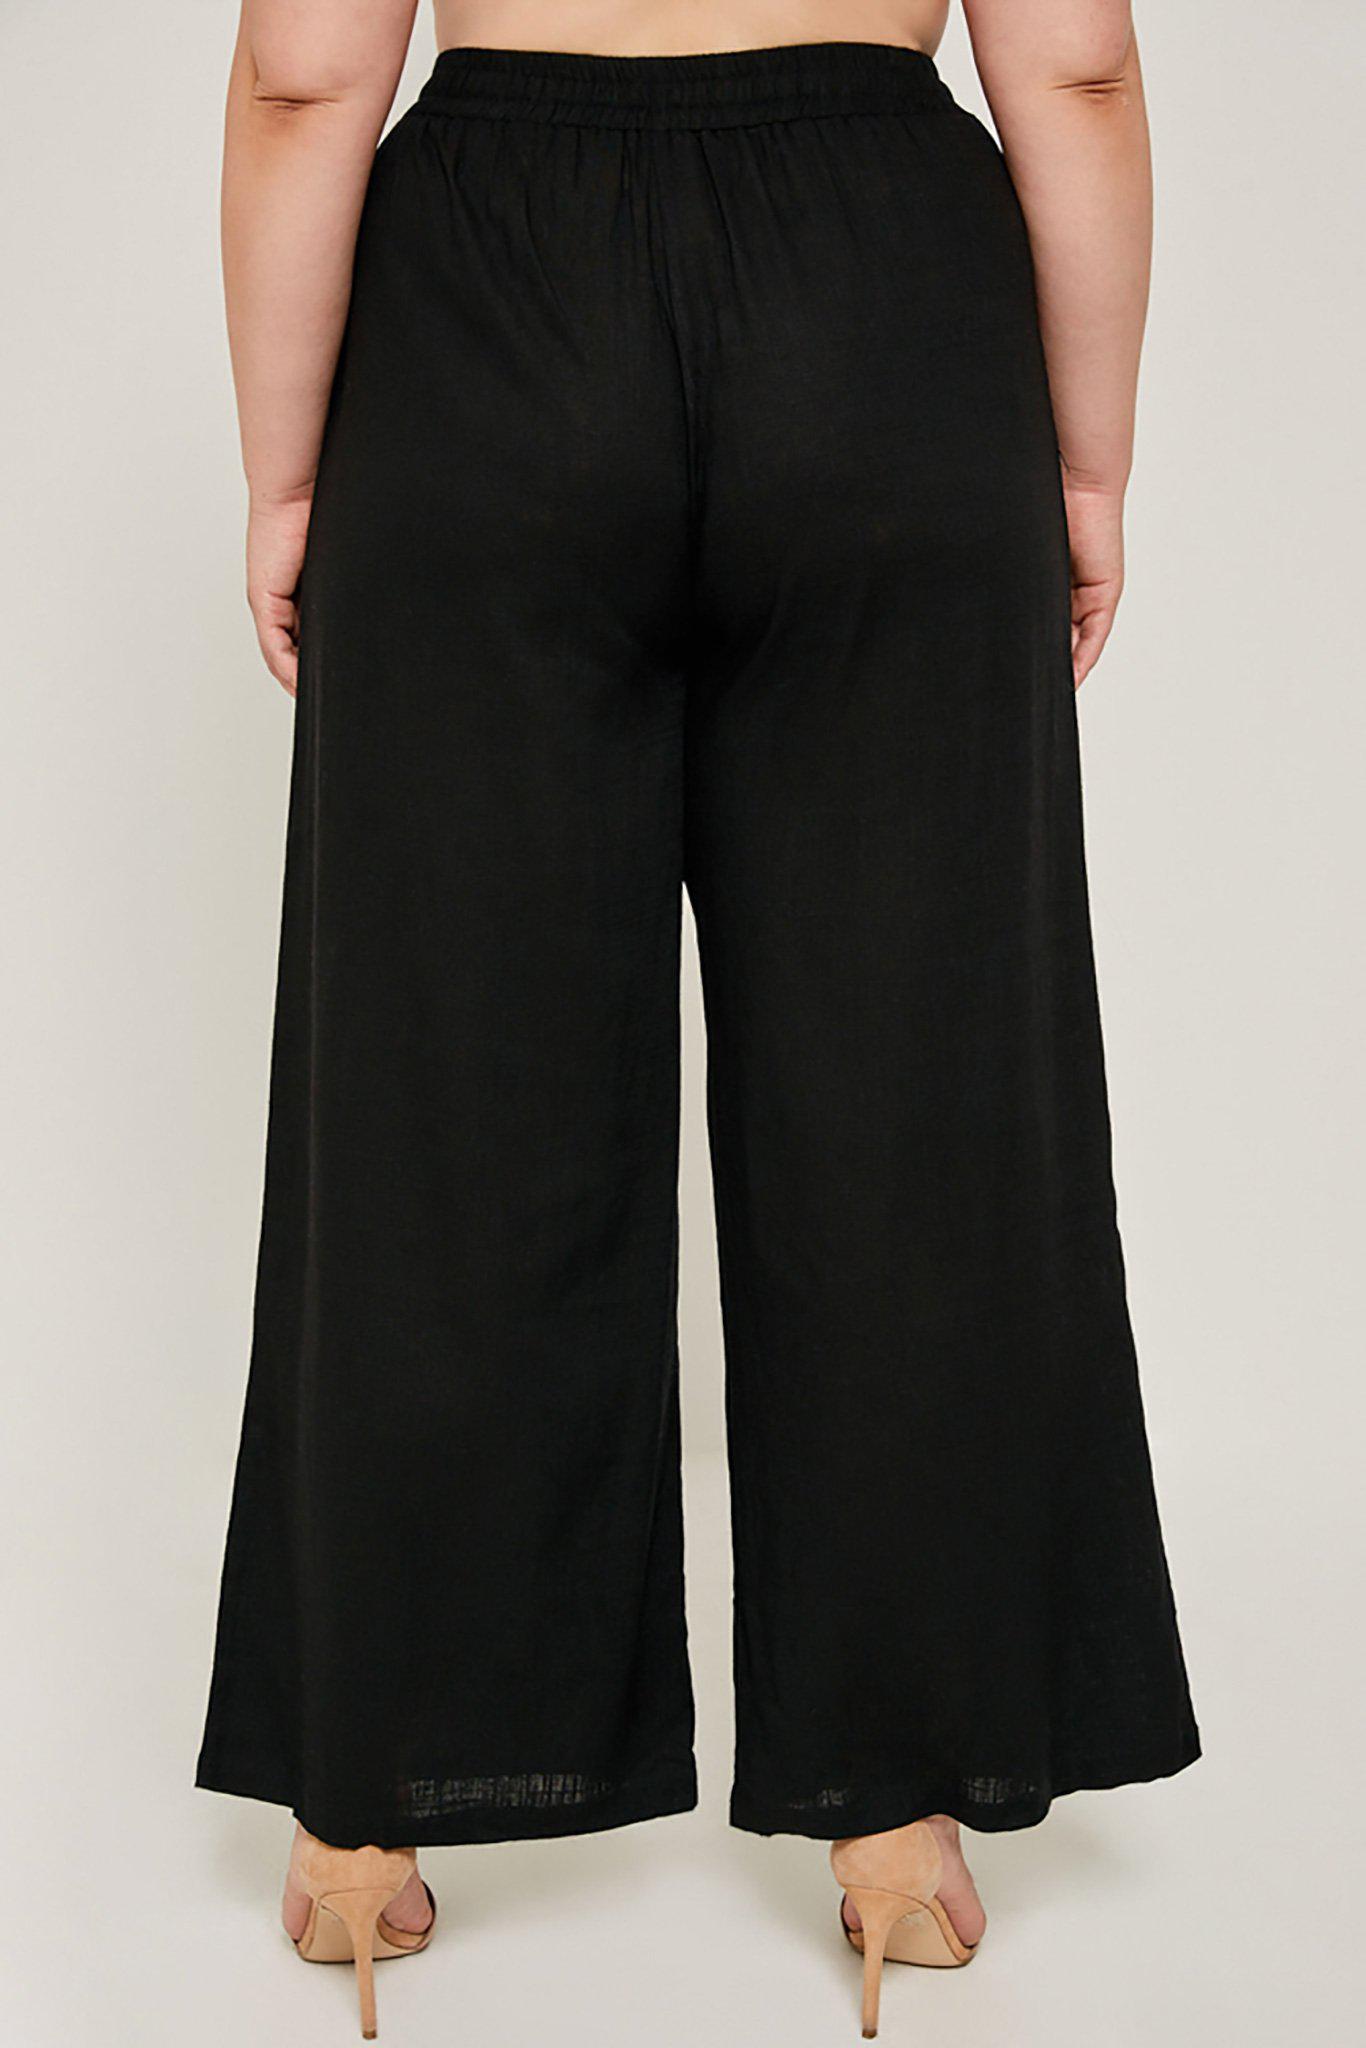 Plus-size wide leg black Madison pant close-up back view on model